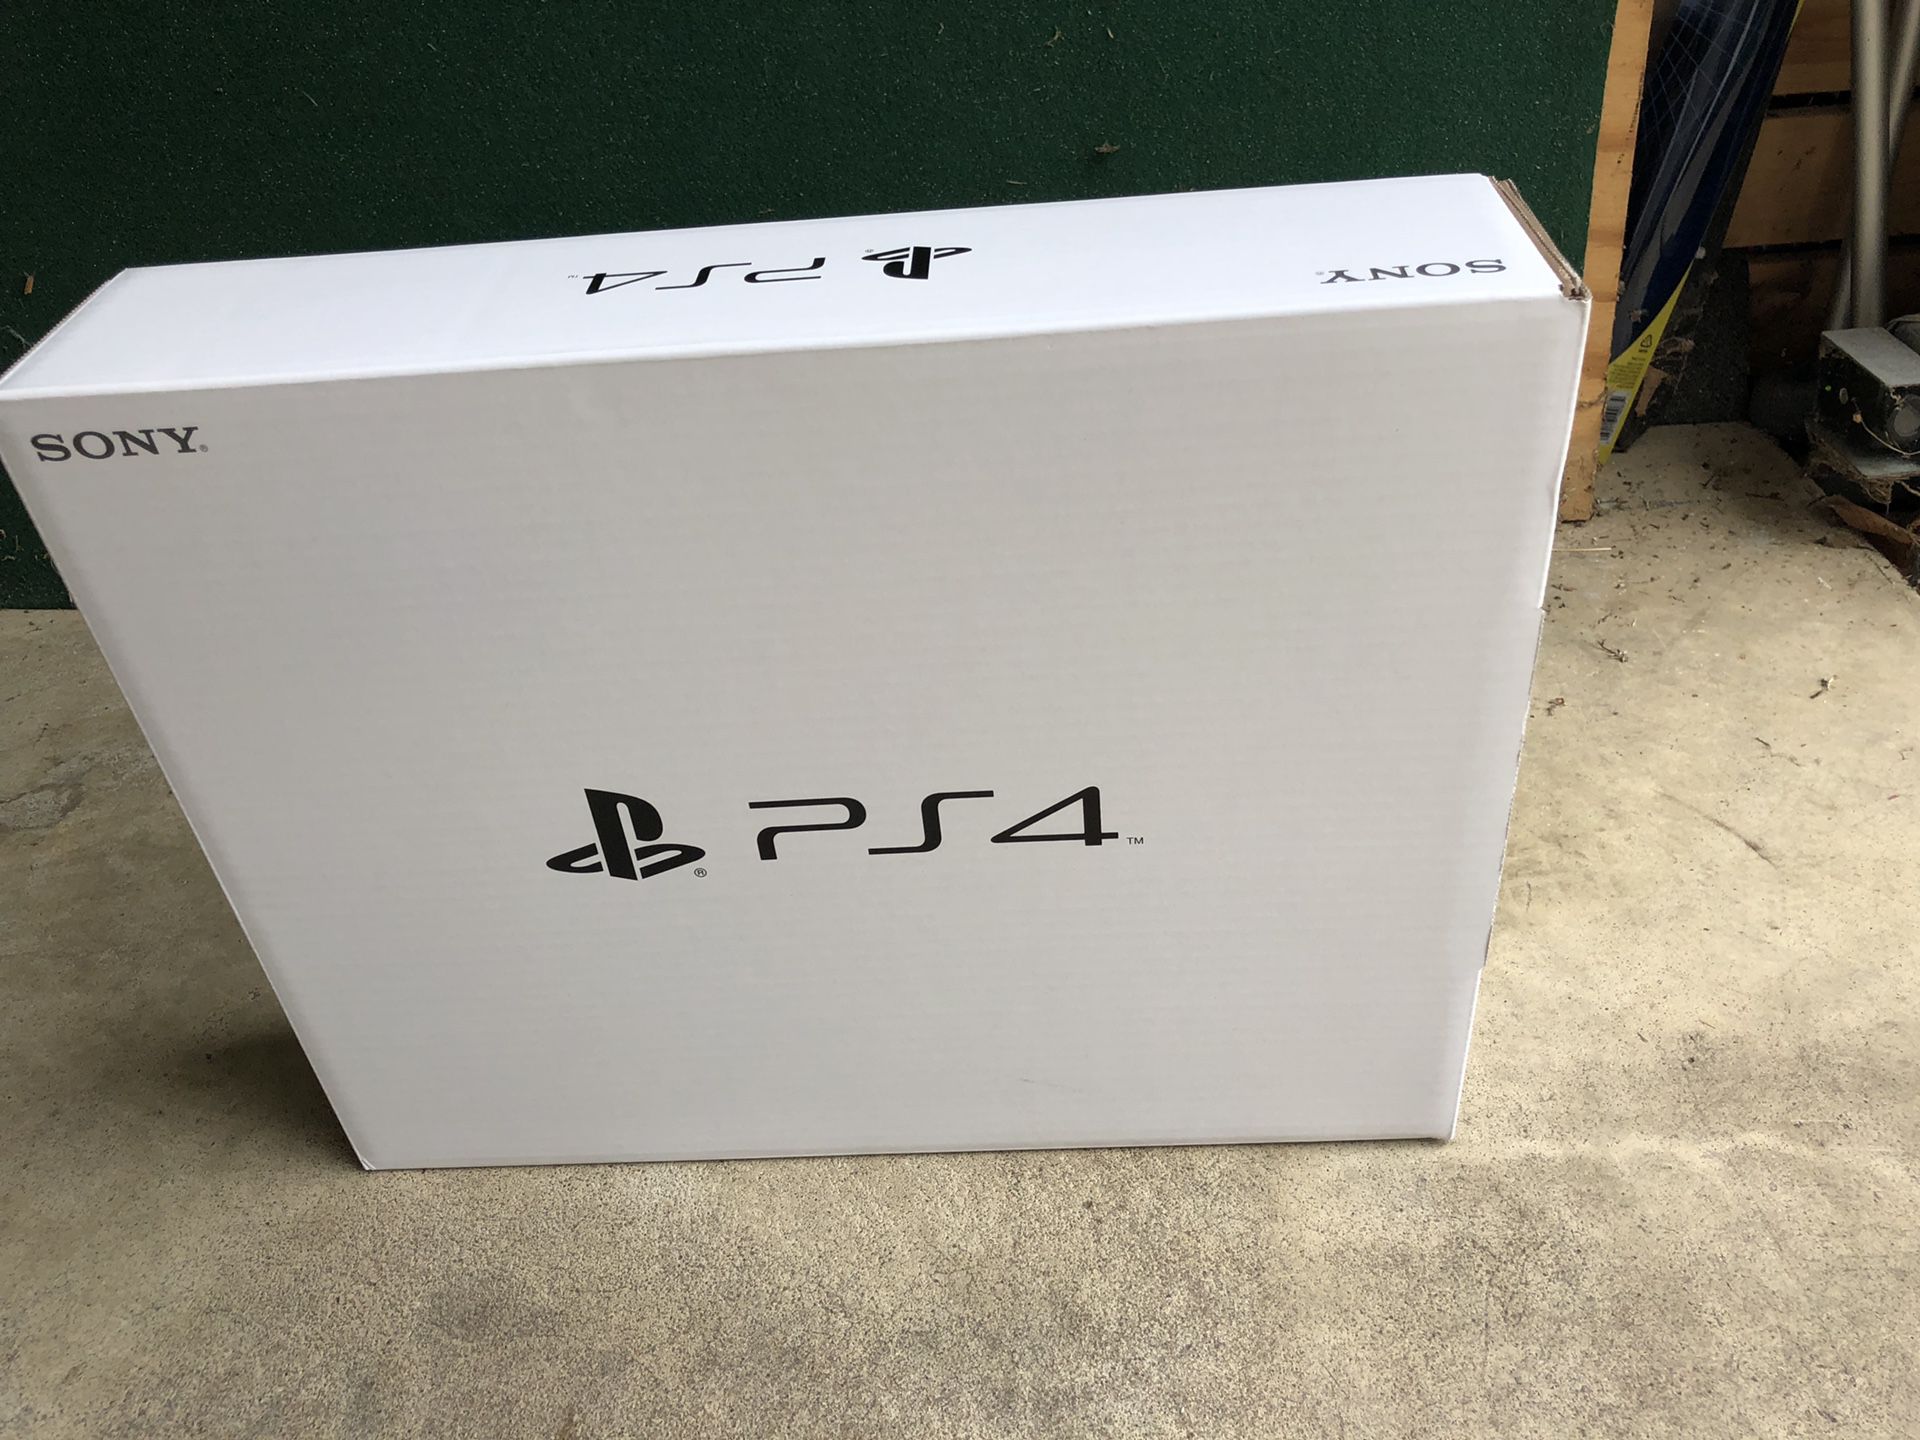 PS4 Box EMPTY Playstation 4. White. No foam inserts.